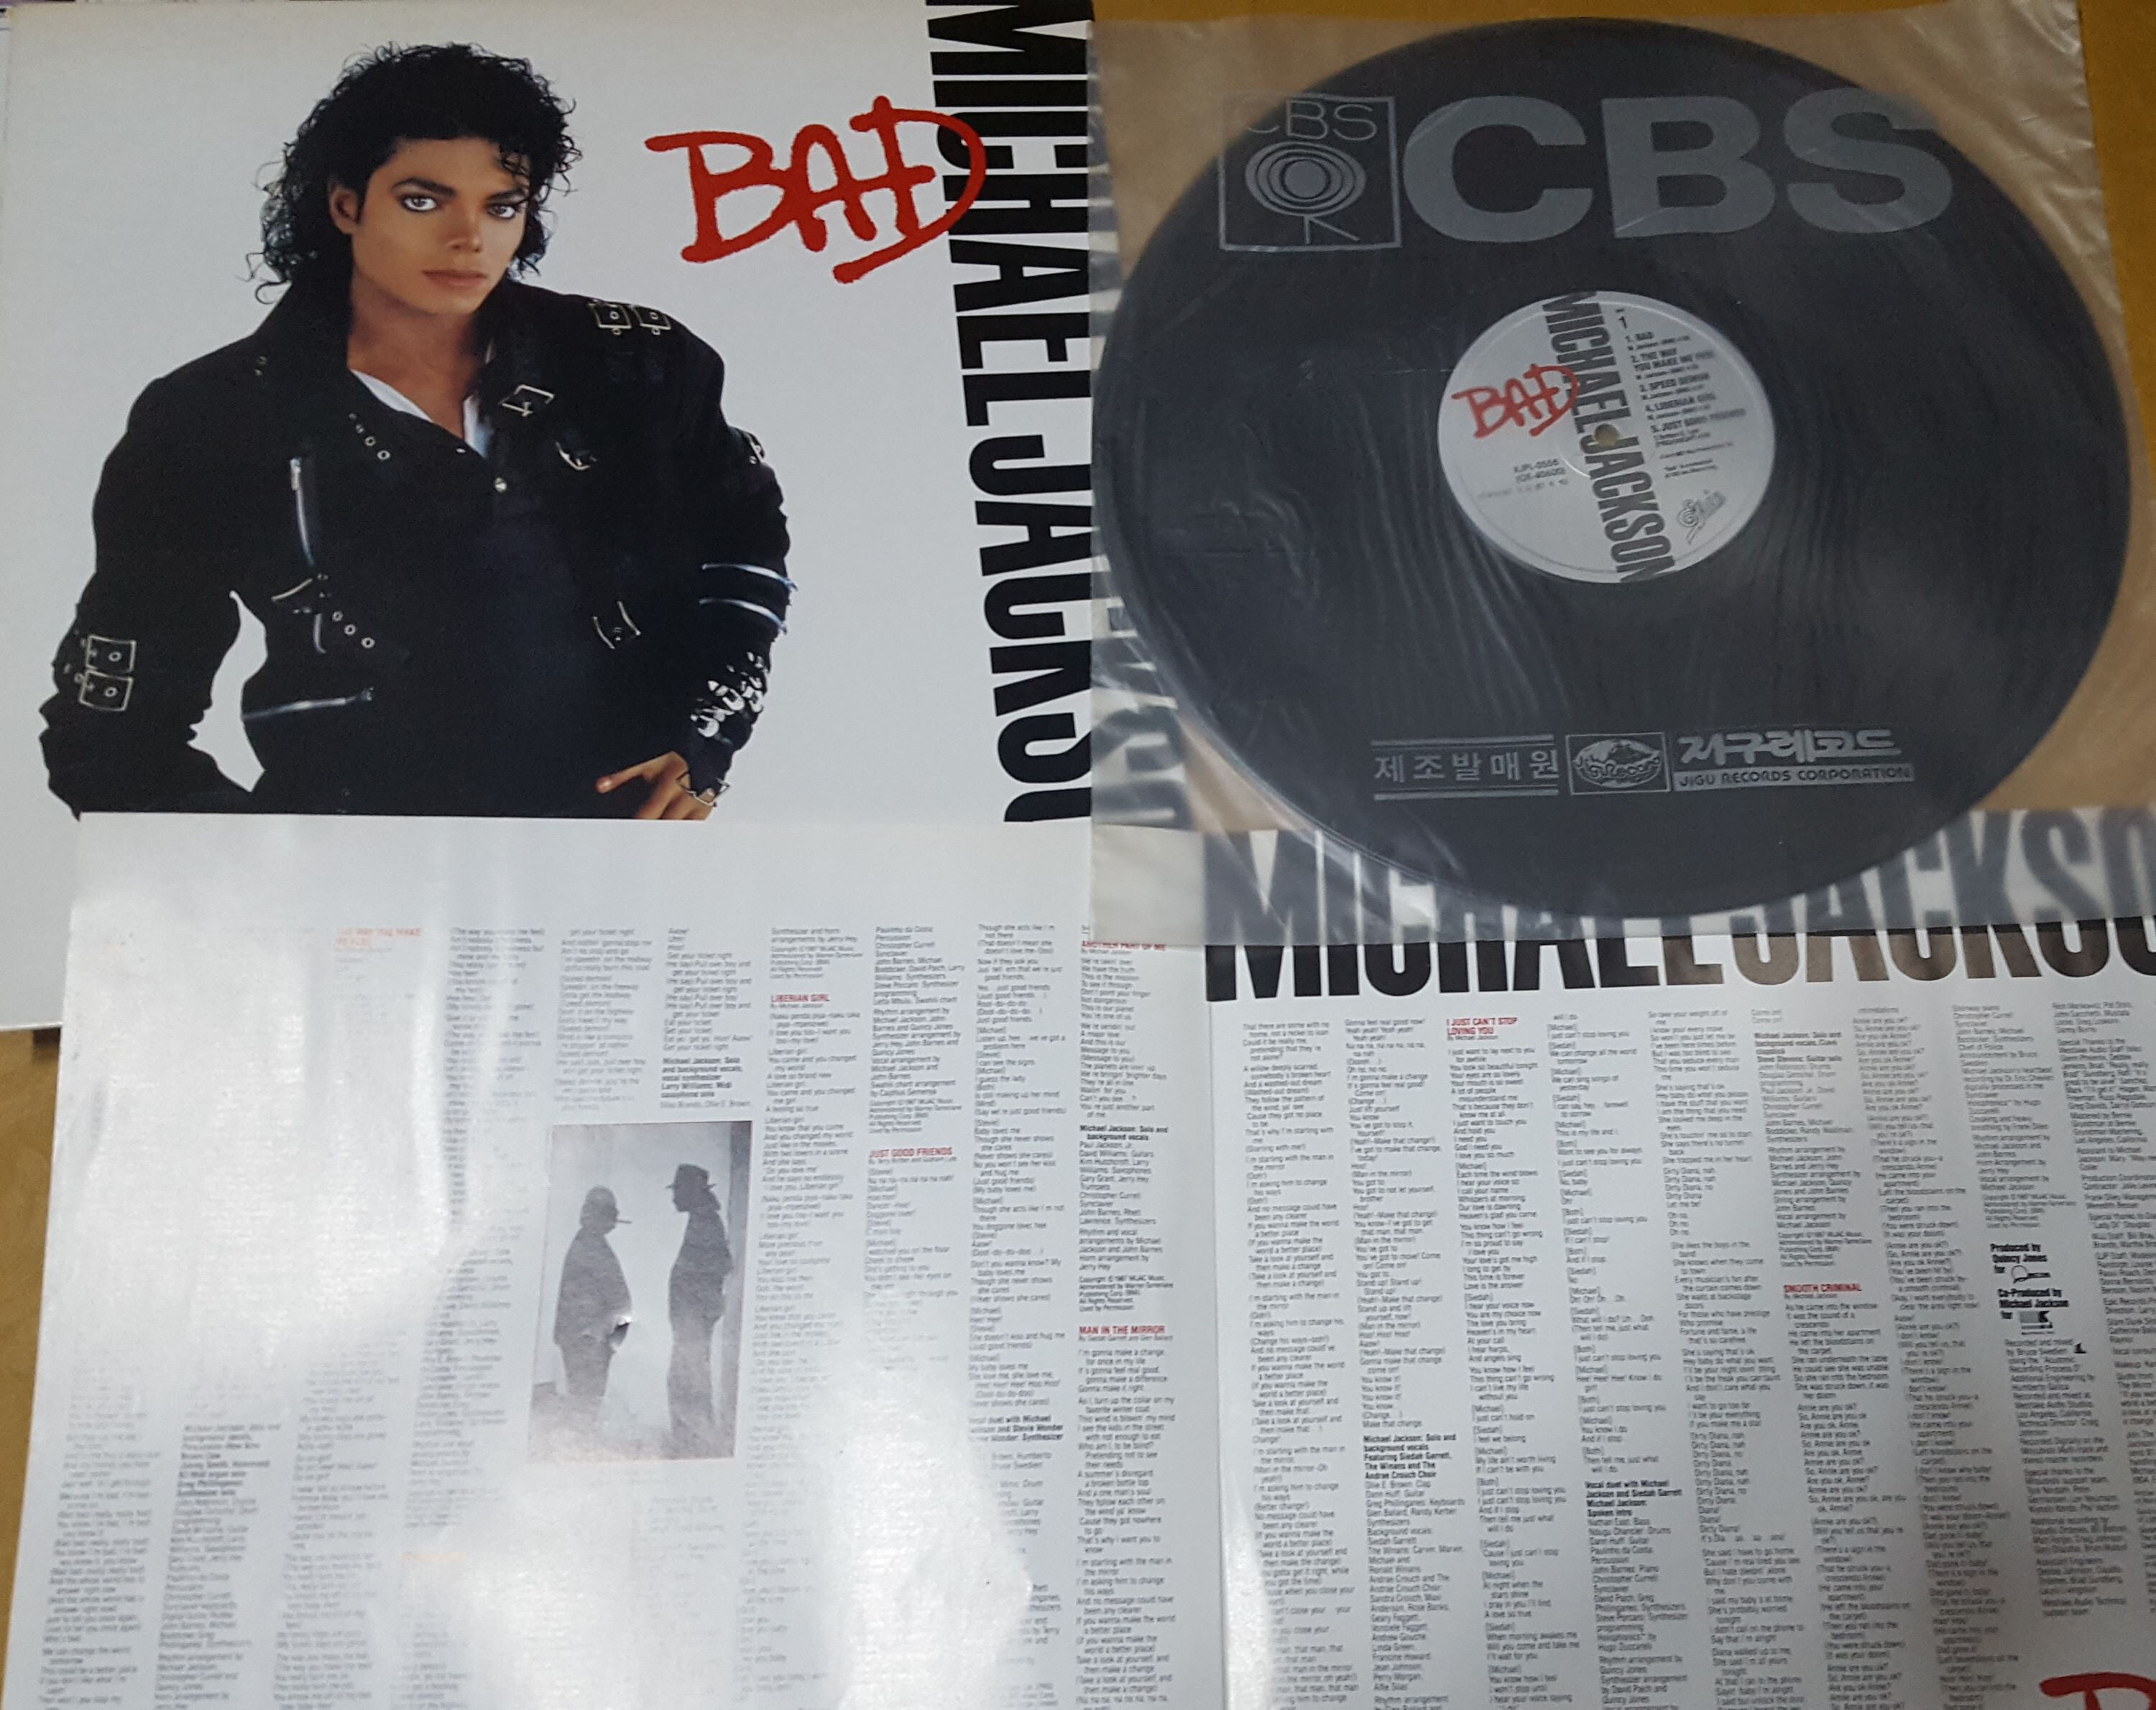 [LP] Michael Jackson - Bad